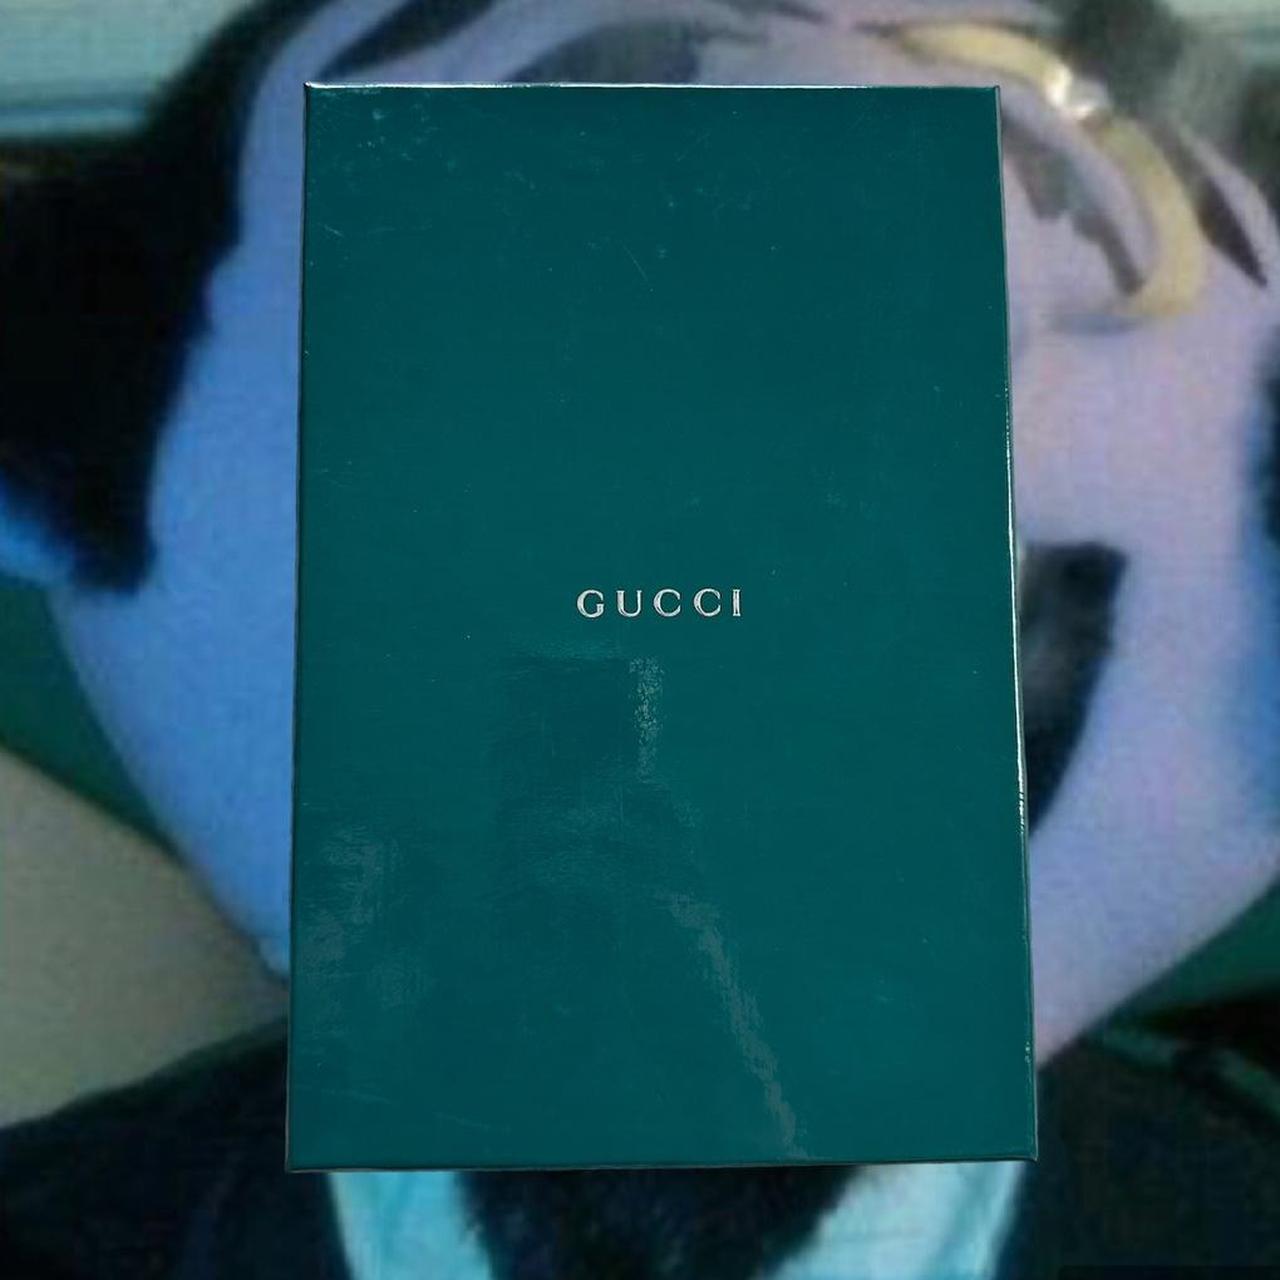 Gucci gift greeting card